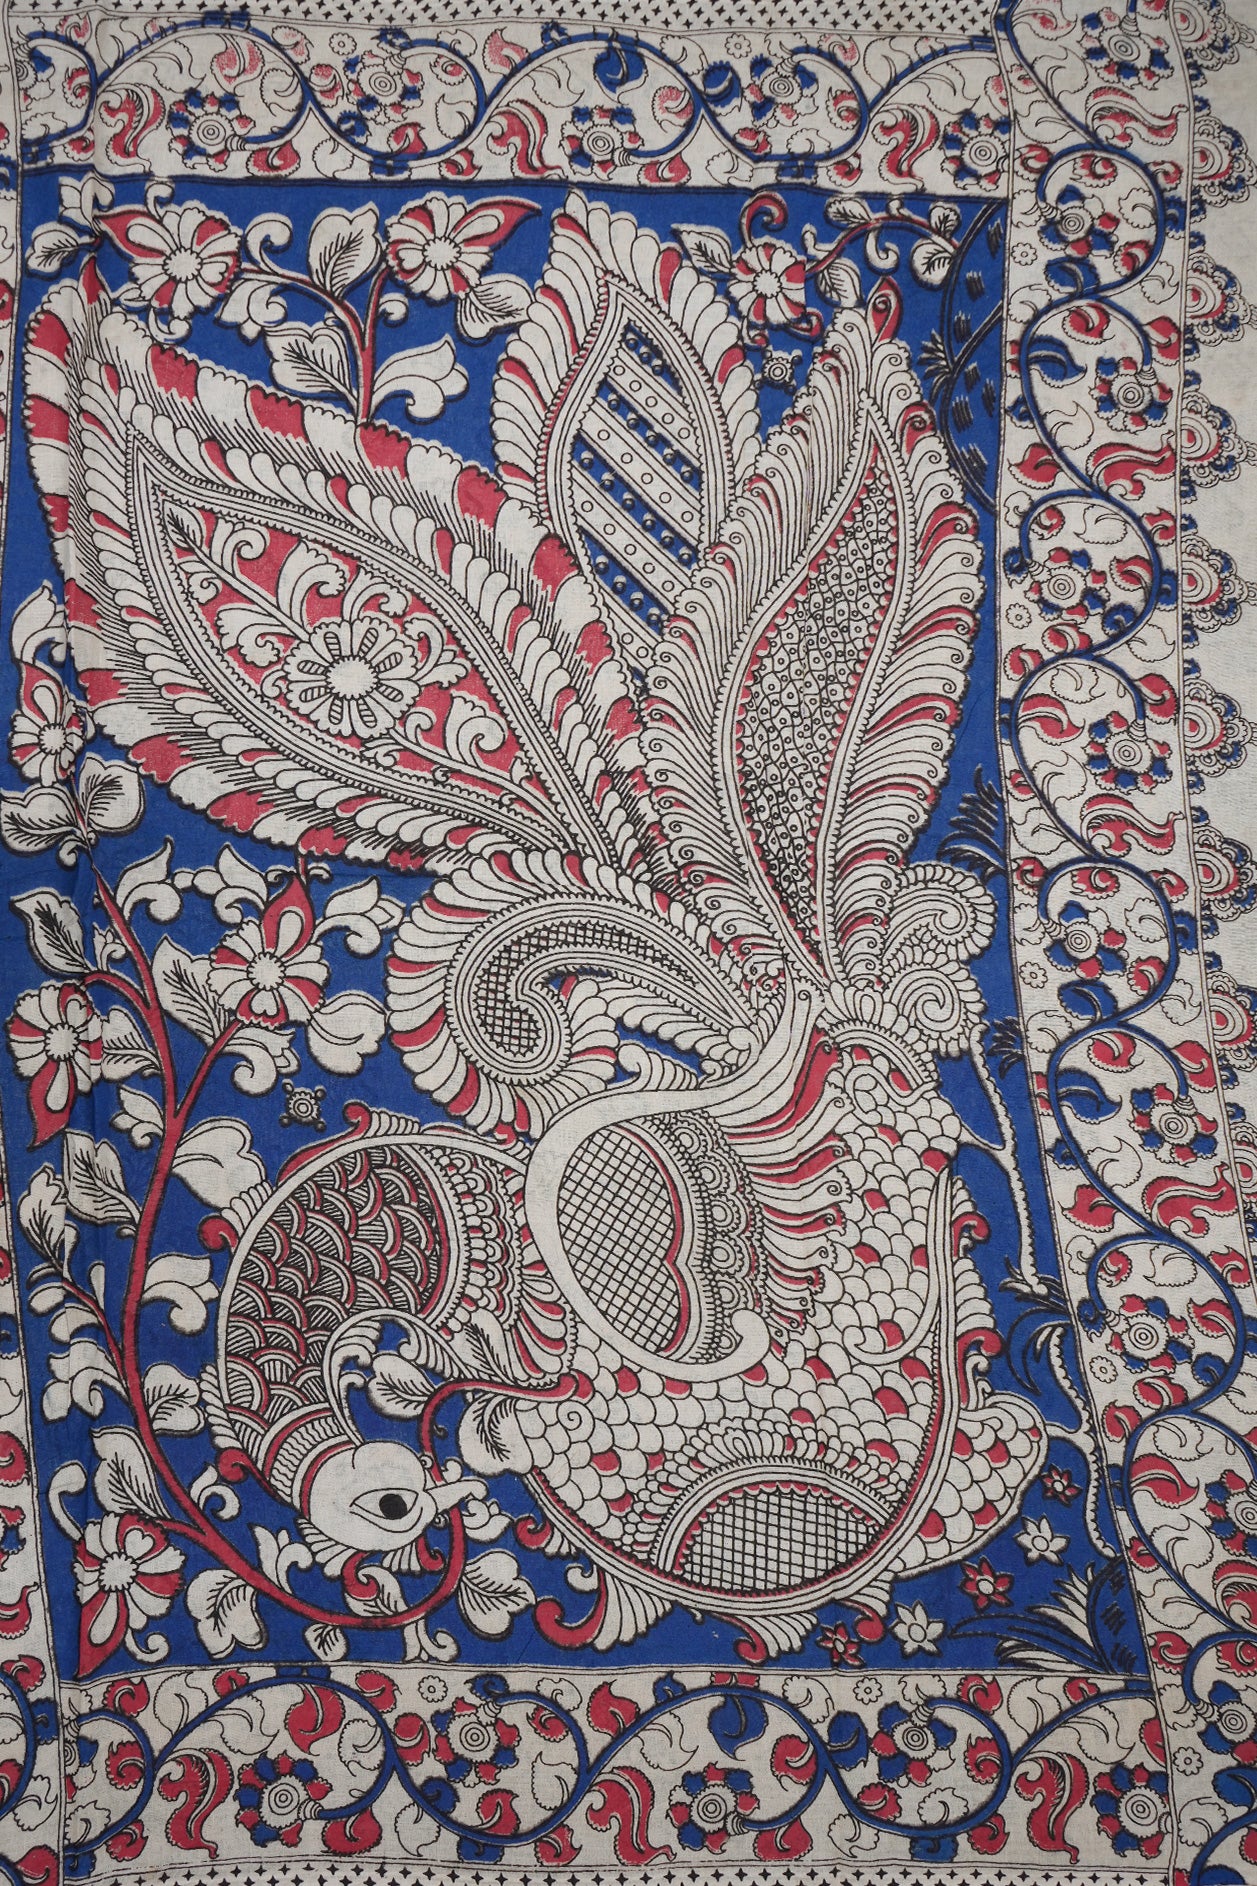 Allover Floral Design Beige Printed Kalamkari Cotton Saree